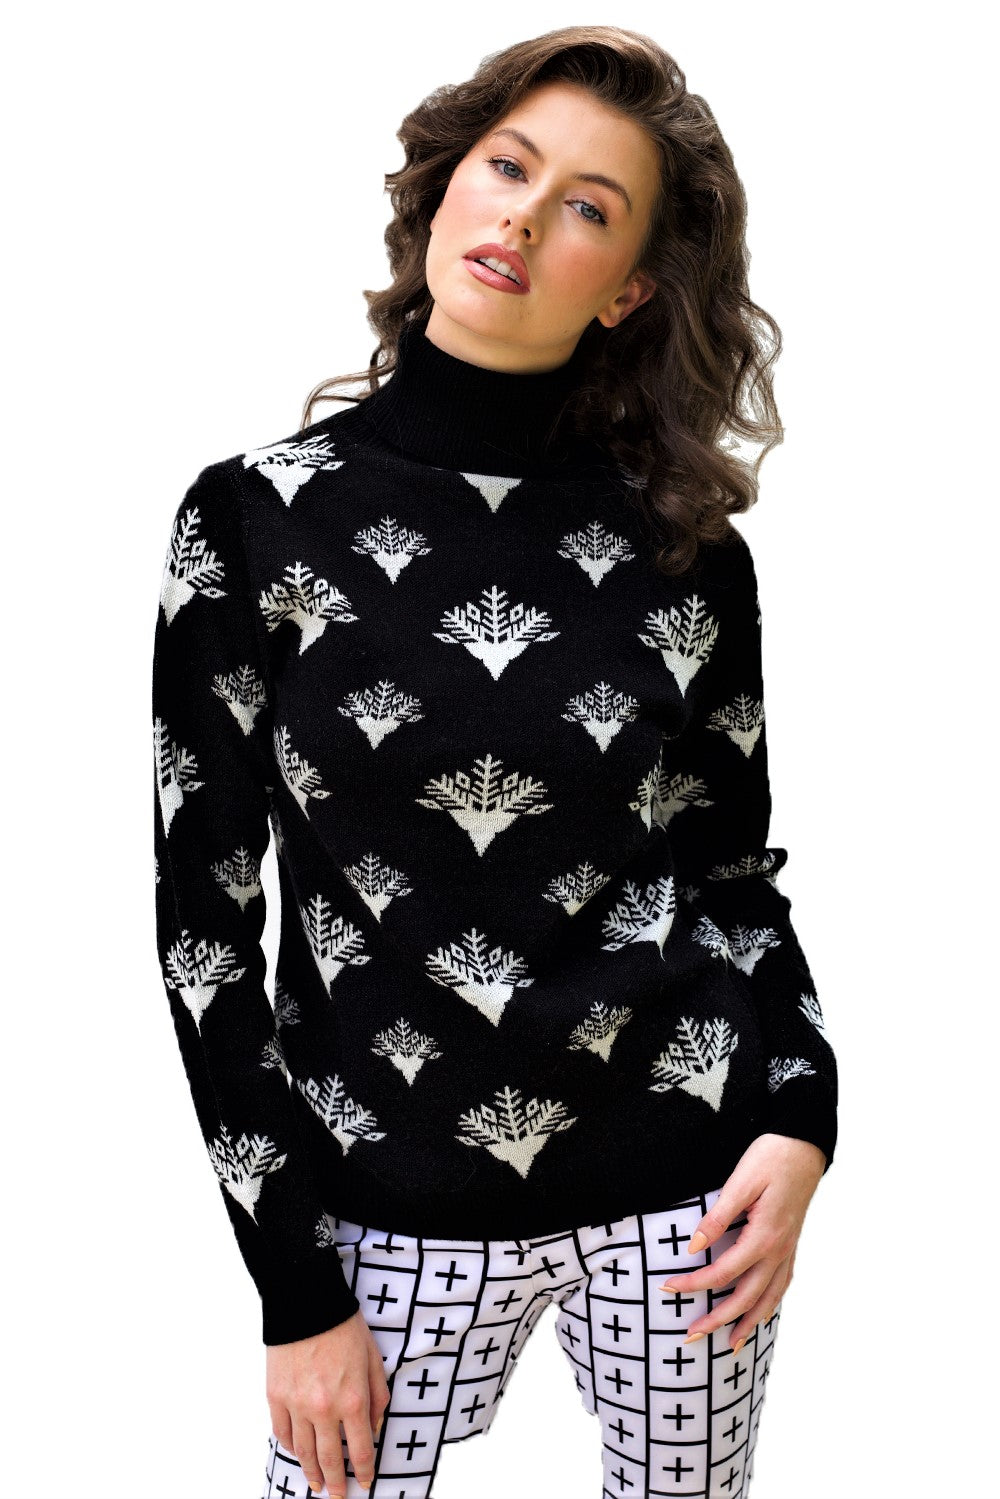 100% Italian Merino Wool SS Logo Sweater Turtleneck Long Sleeve Warm Soft Knitted Fall Winter Pullover